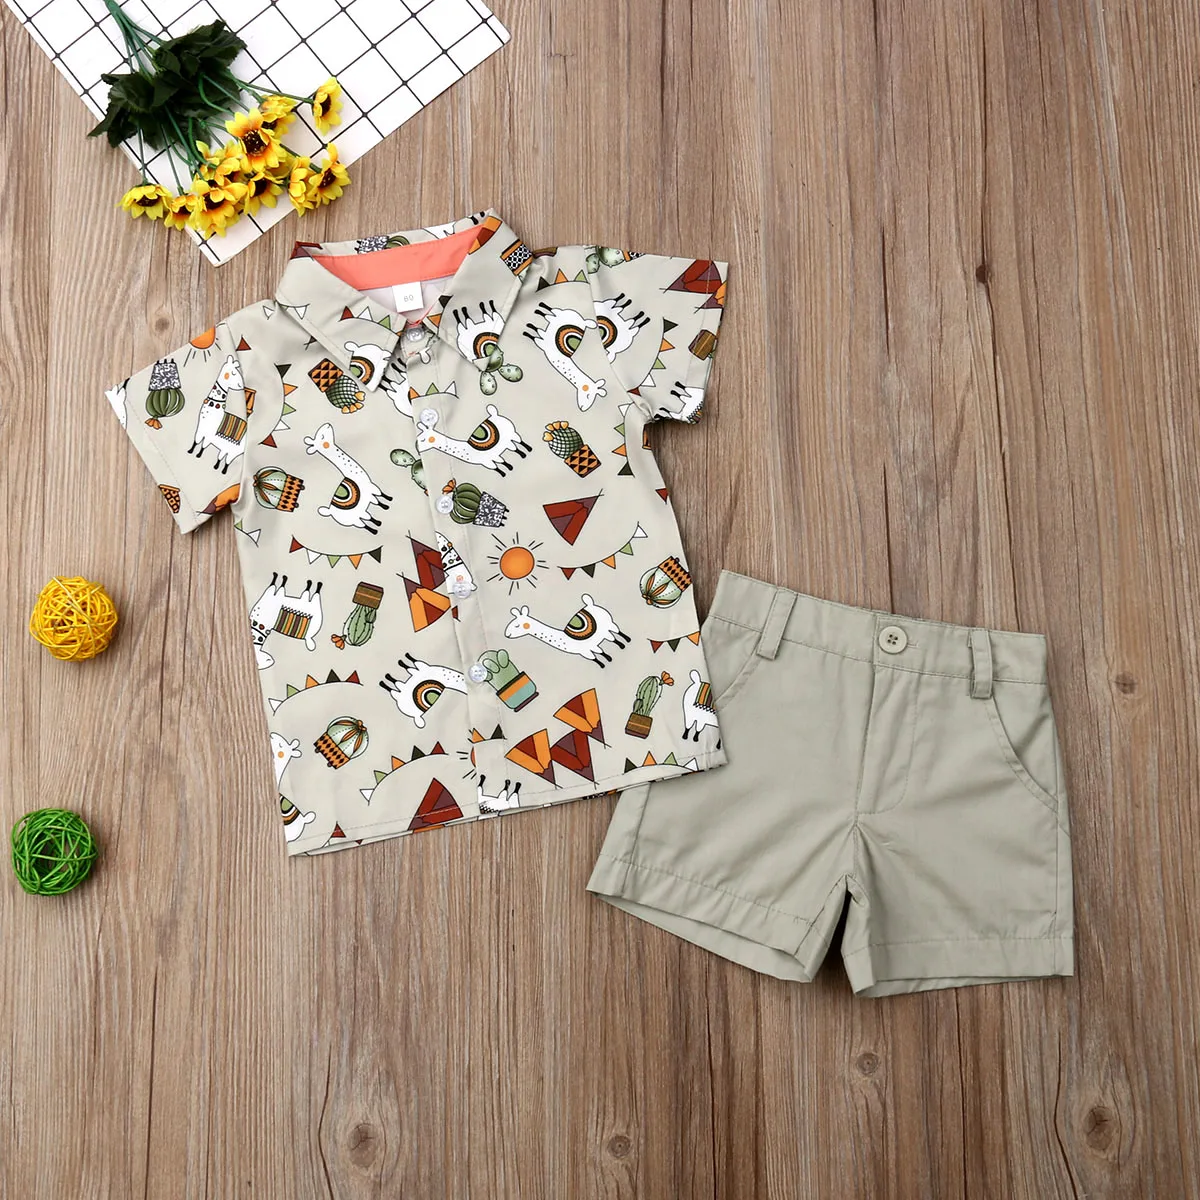 Toddler Kids Baby Boy Gentleman Clothes Shirt Alpaca Print Tops Shorts Pants Formal Outfit UK